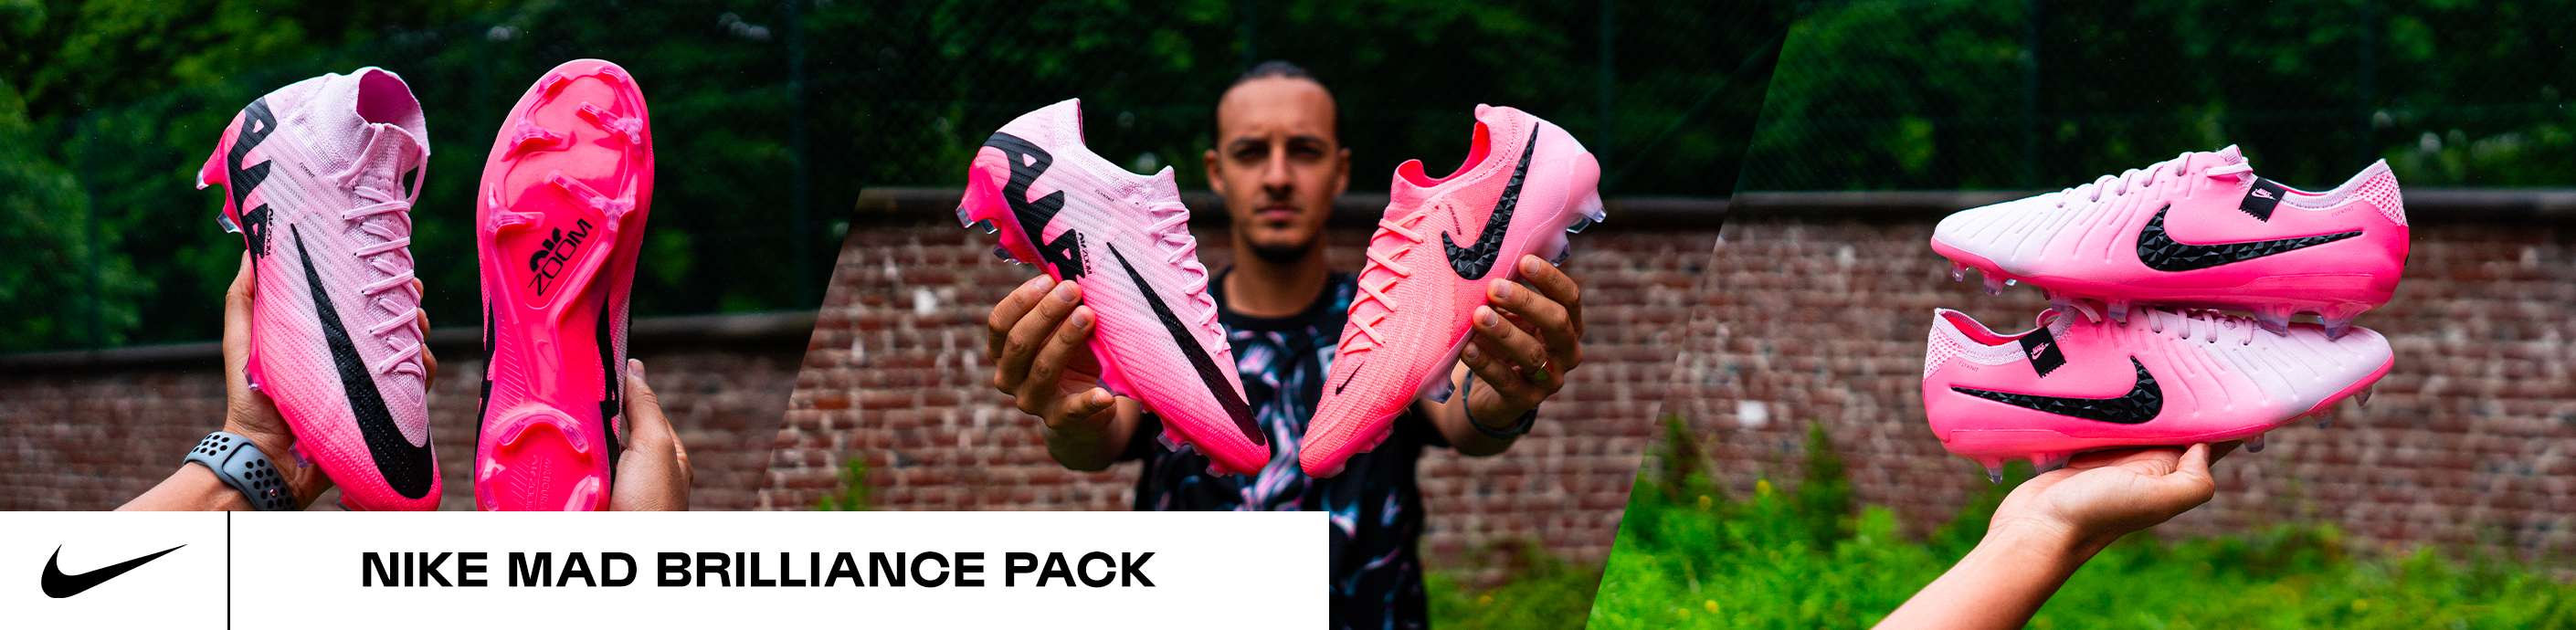 Nike Mad Brilliance pack